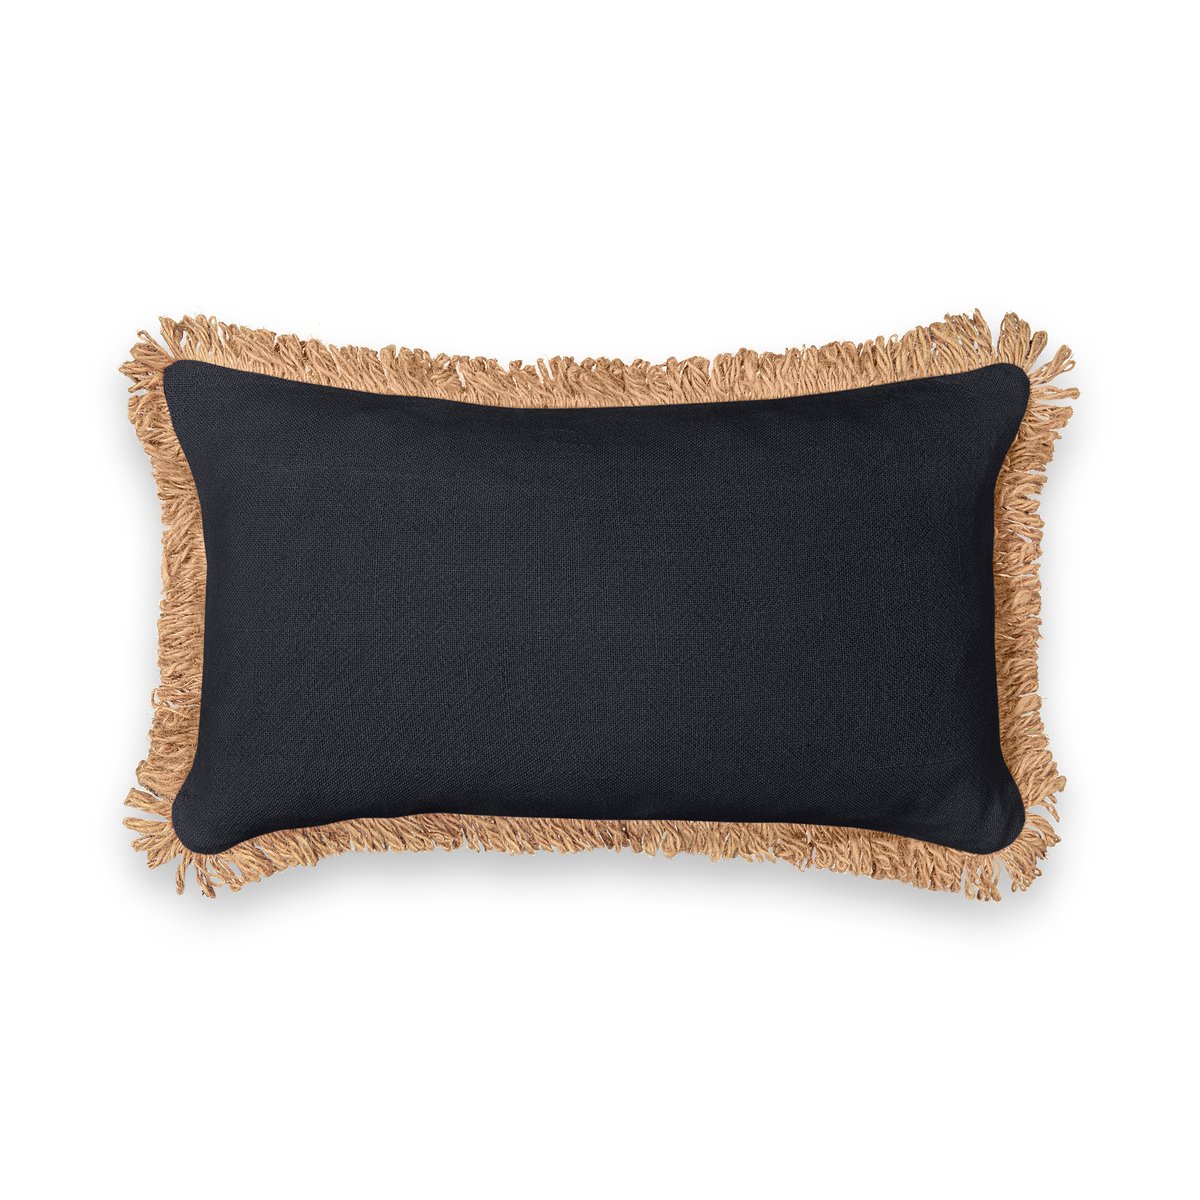 Чехол LaRedoute На подушку из джута Jutty 50 x 30 см черный, размер 50 x 30 см - фото 2